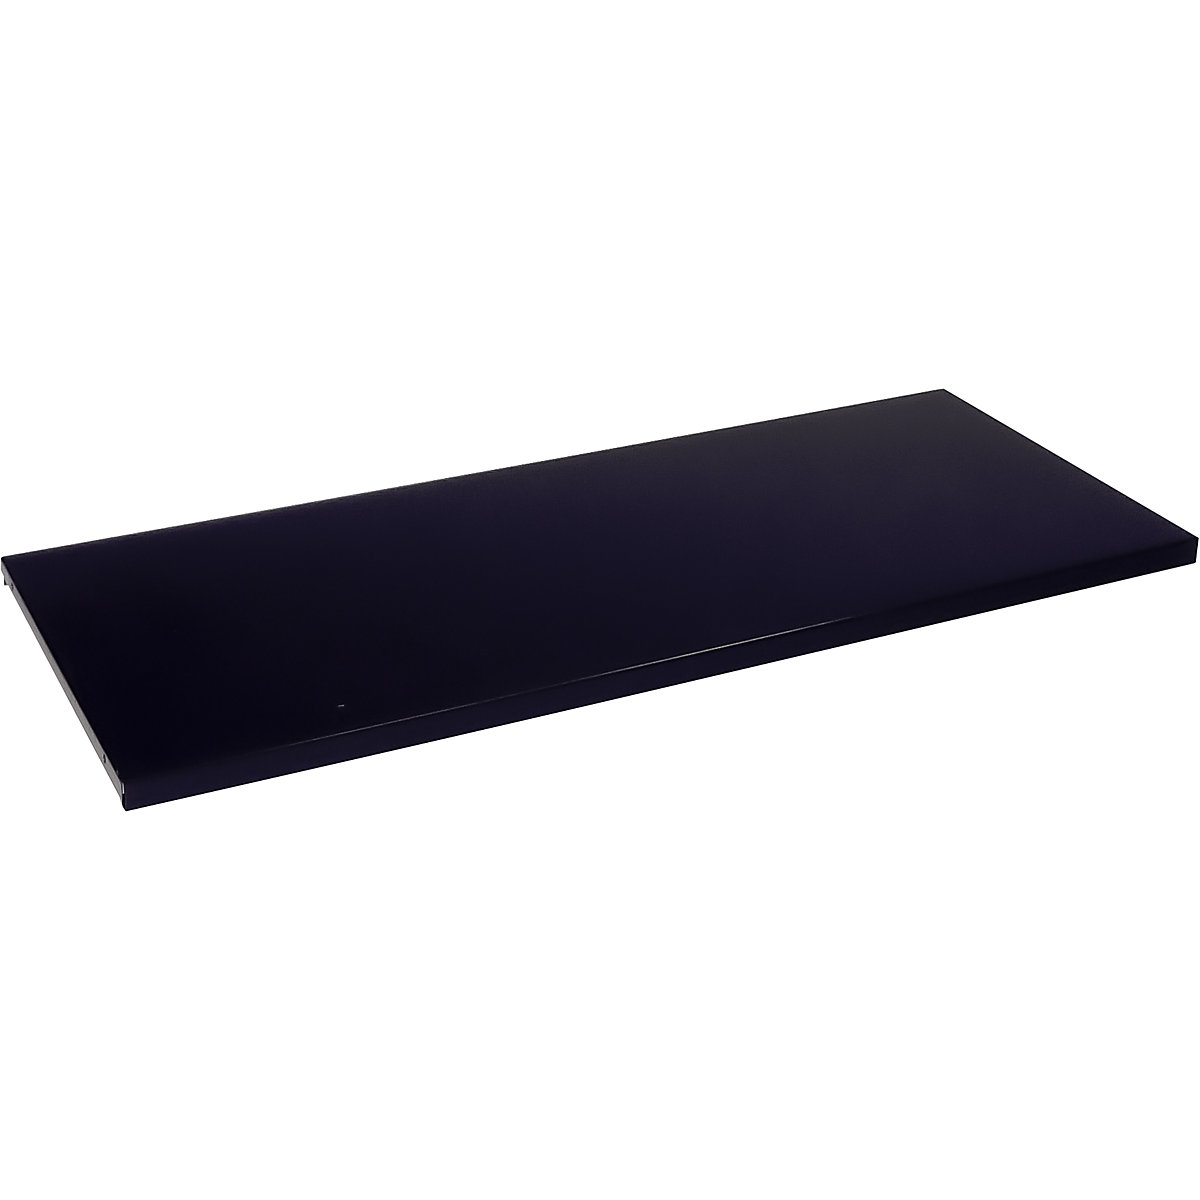 Shelf for roller shutter cupboard – C+P, black grey RAL 7021, for width 800 mm